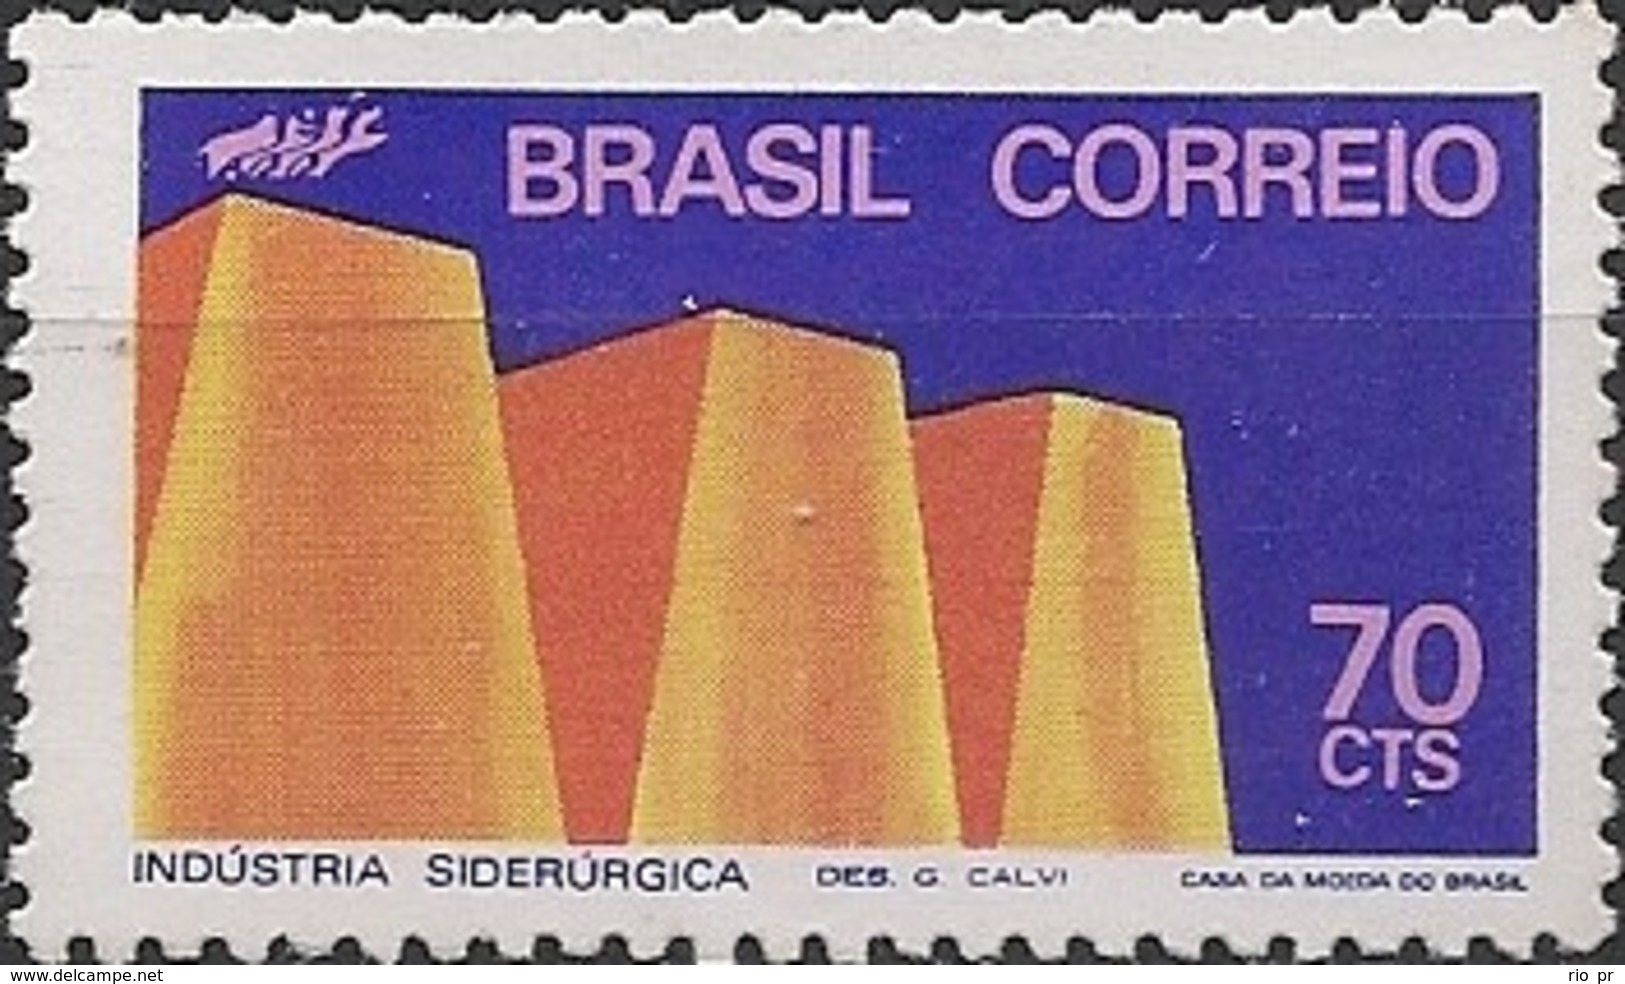 BRAZIL - INDUSTRIAL DEVELOPMENT, SIDERURGICAL INDUSTRY 1972 - MNH - Ongebruikt